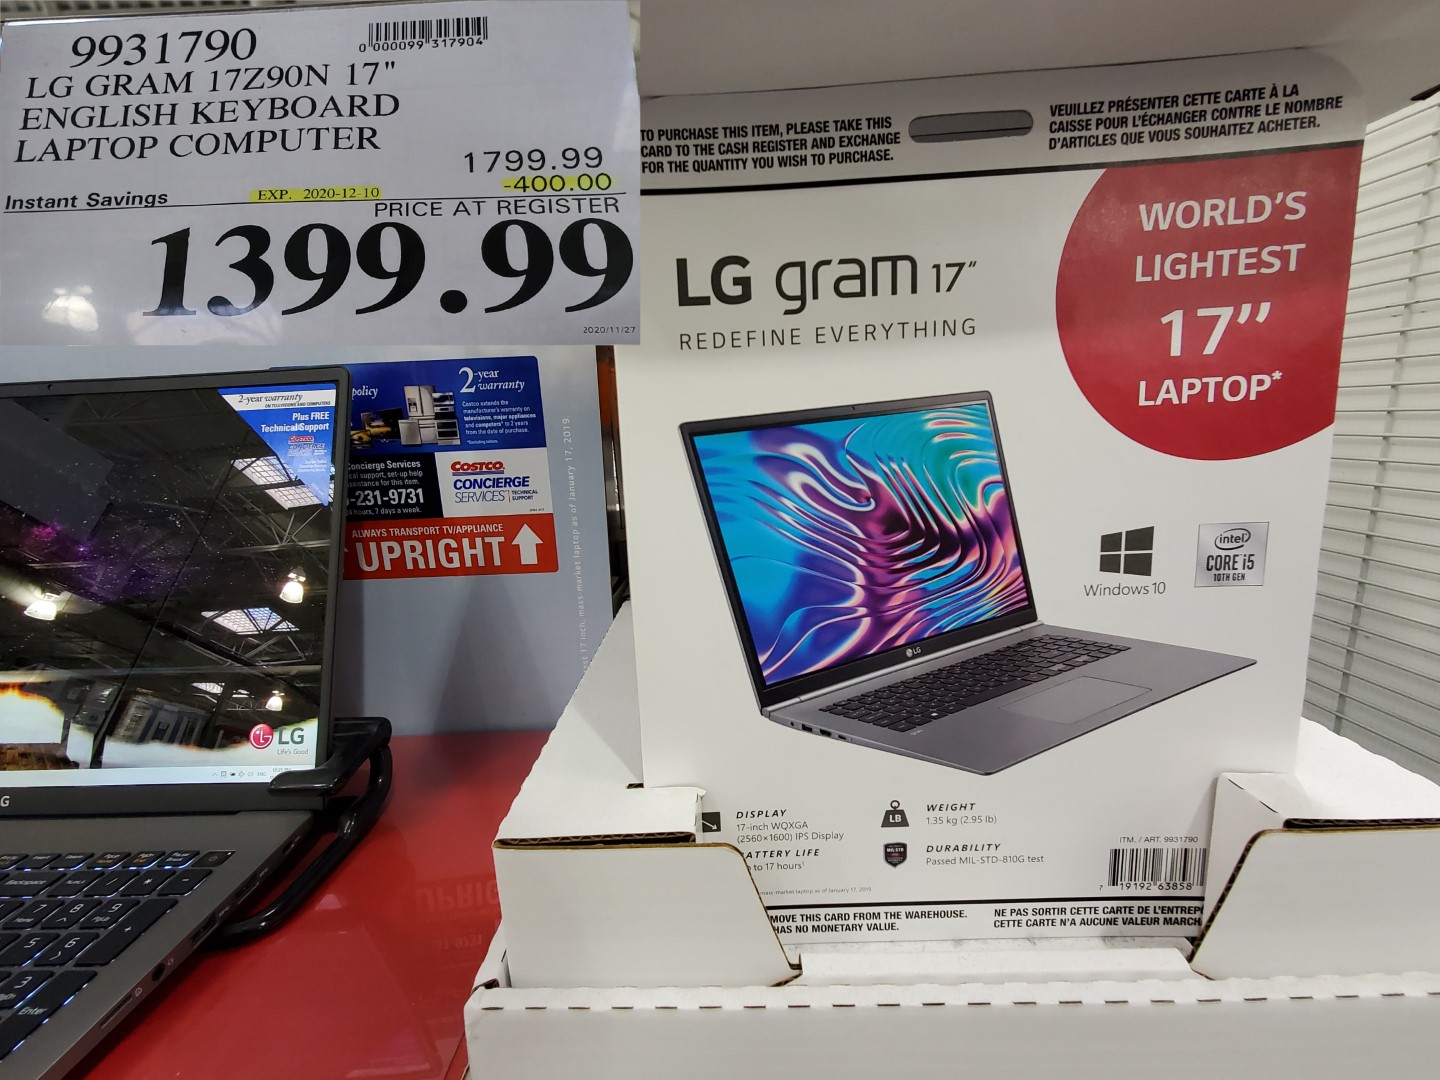 LG gram 17" laptop